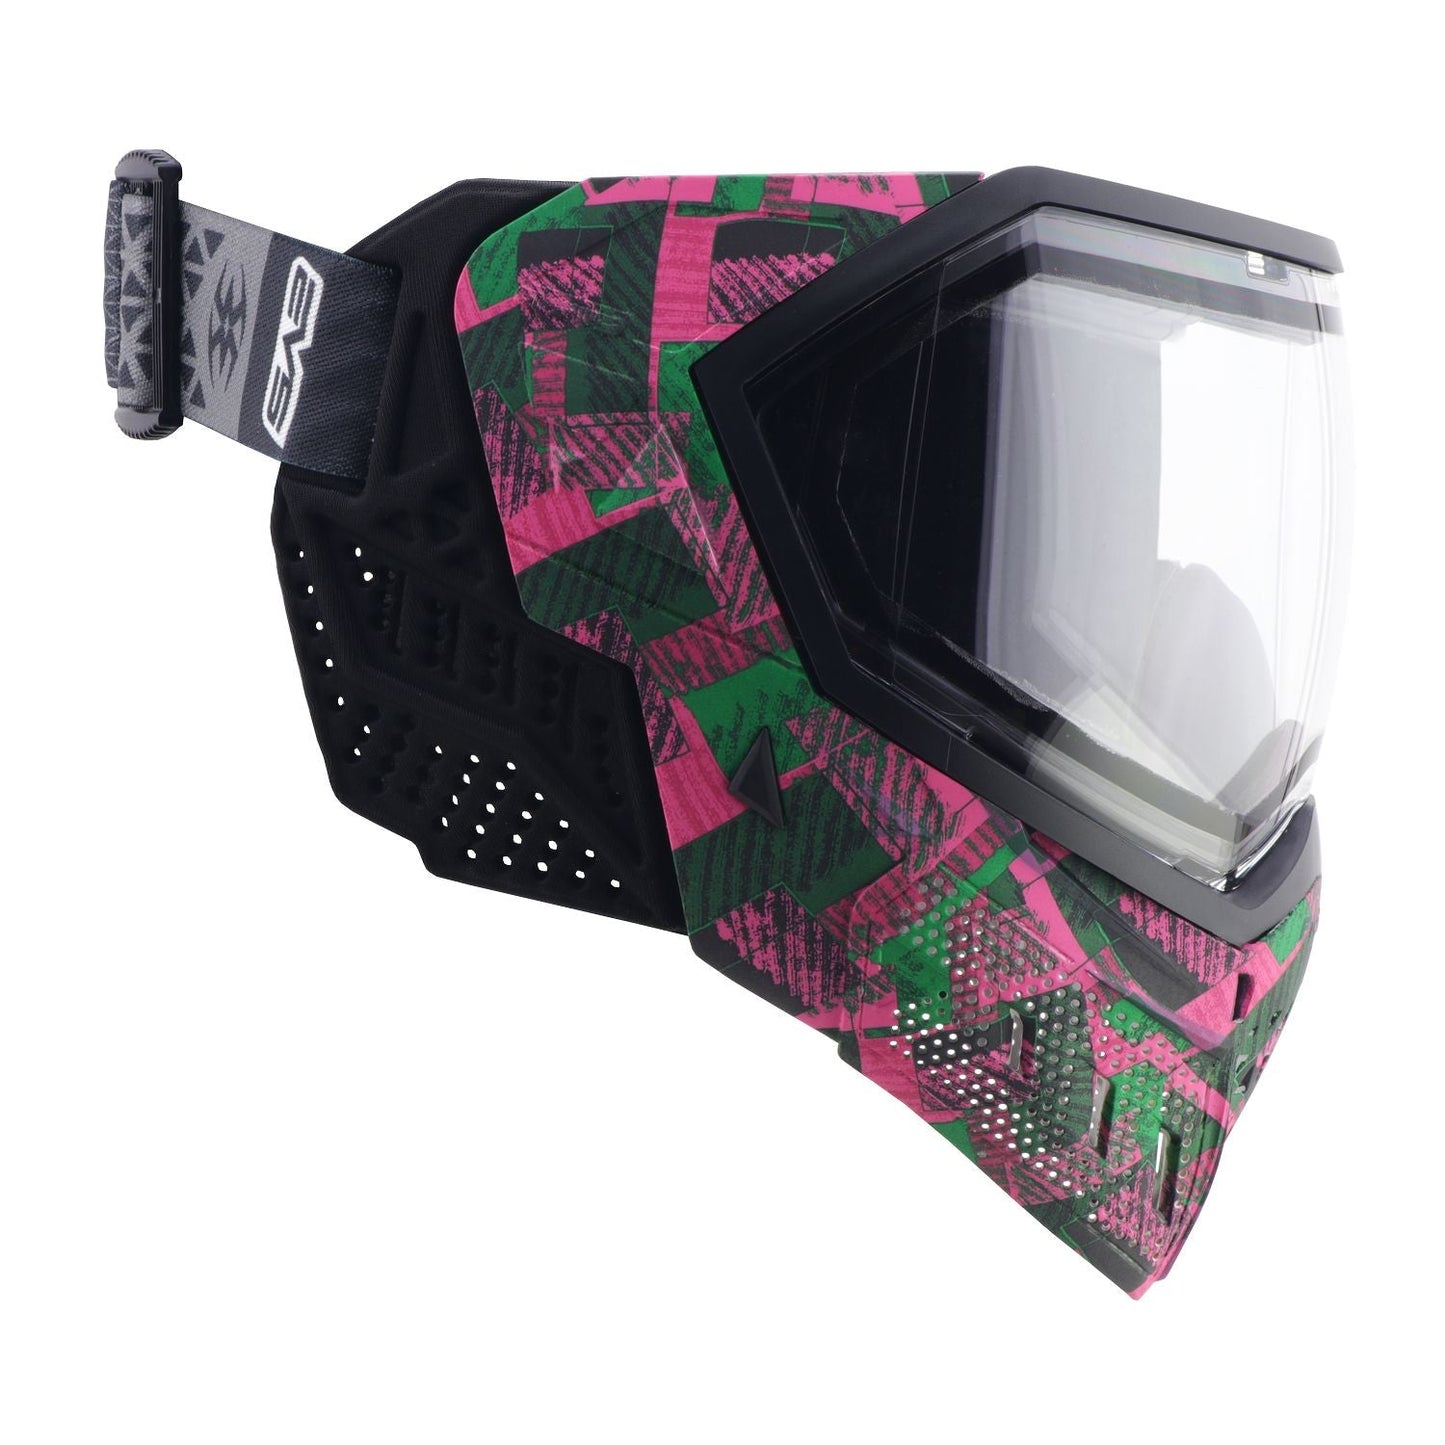 Empire EVS Geo Grunge SE w/ ONLY Thermal Ninja Lens